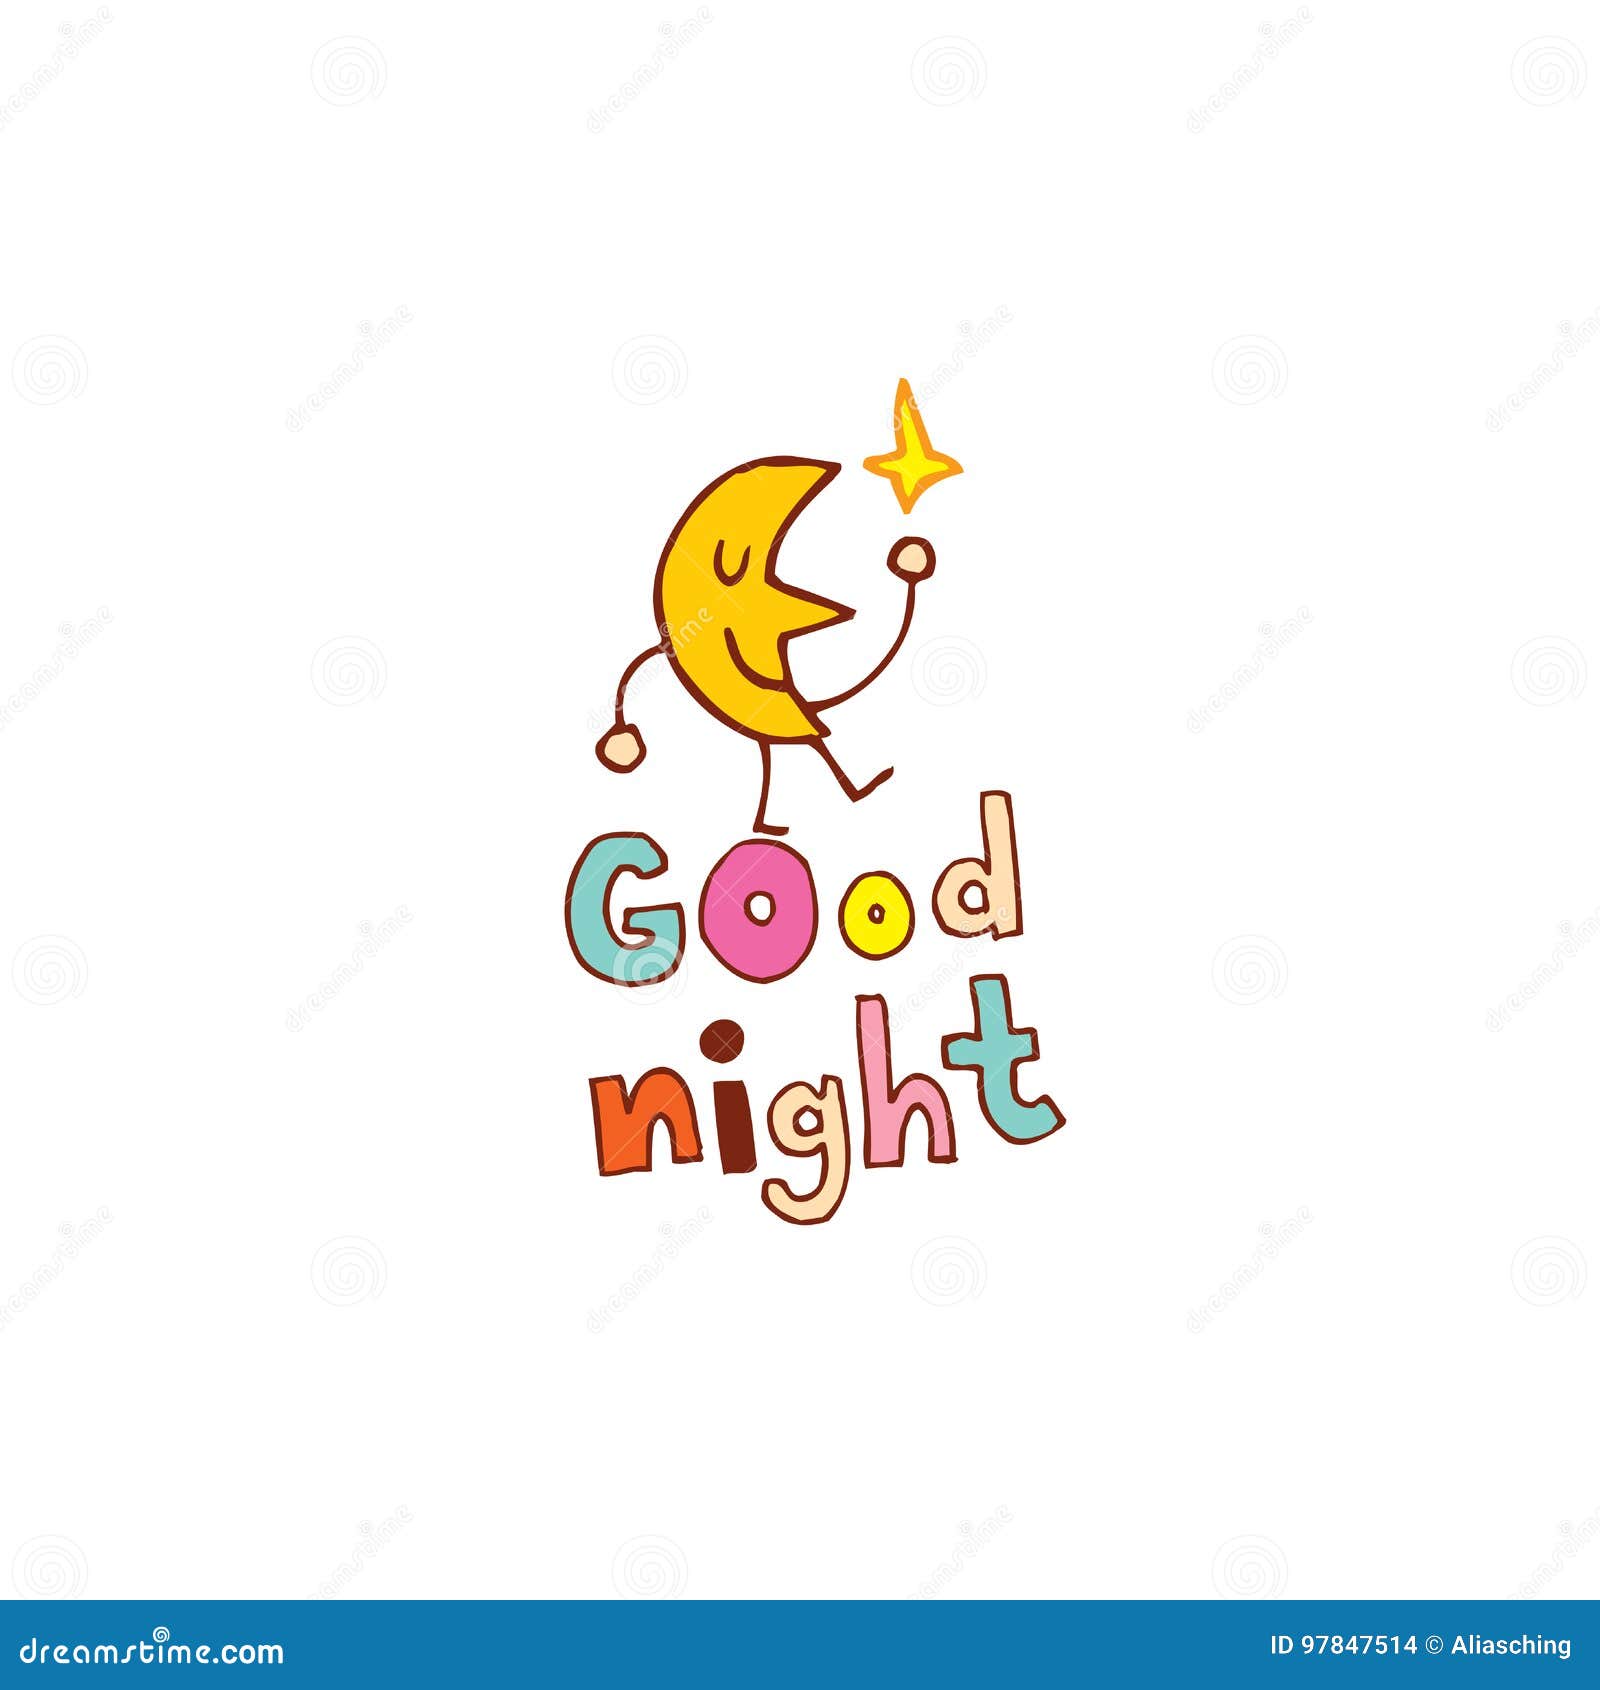 Good night stock vector. Illustration of lettering, baby - 97847514